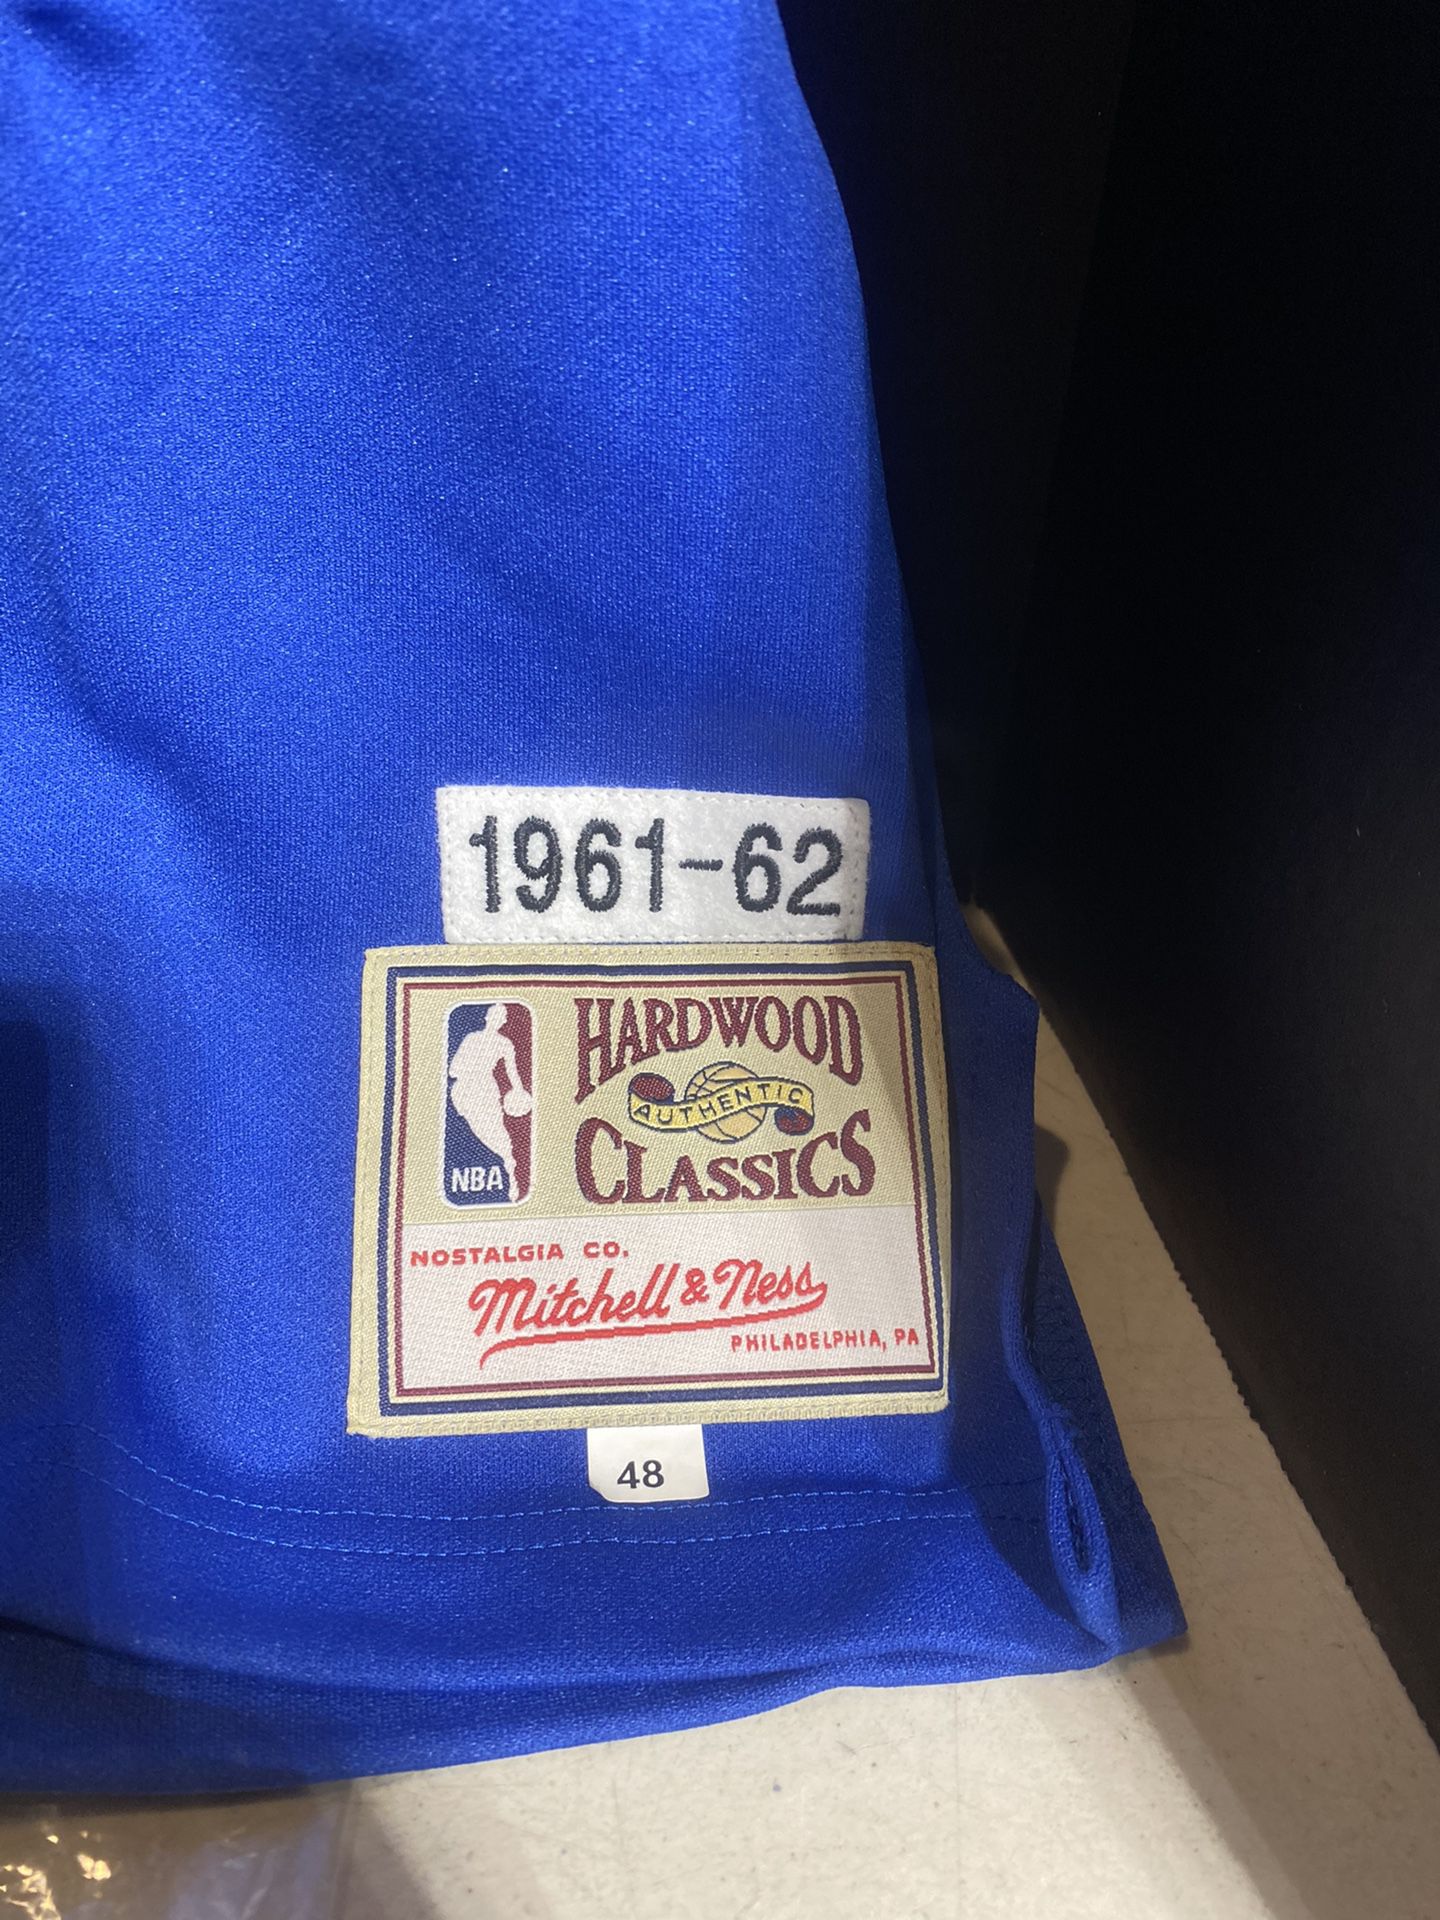 Nba hardwood classic Kobe Bryant Jersey for Sale in Oak Park, IL - OfferUp